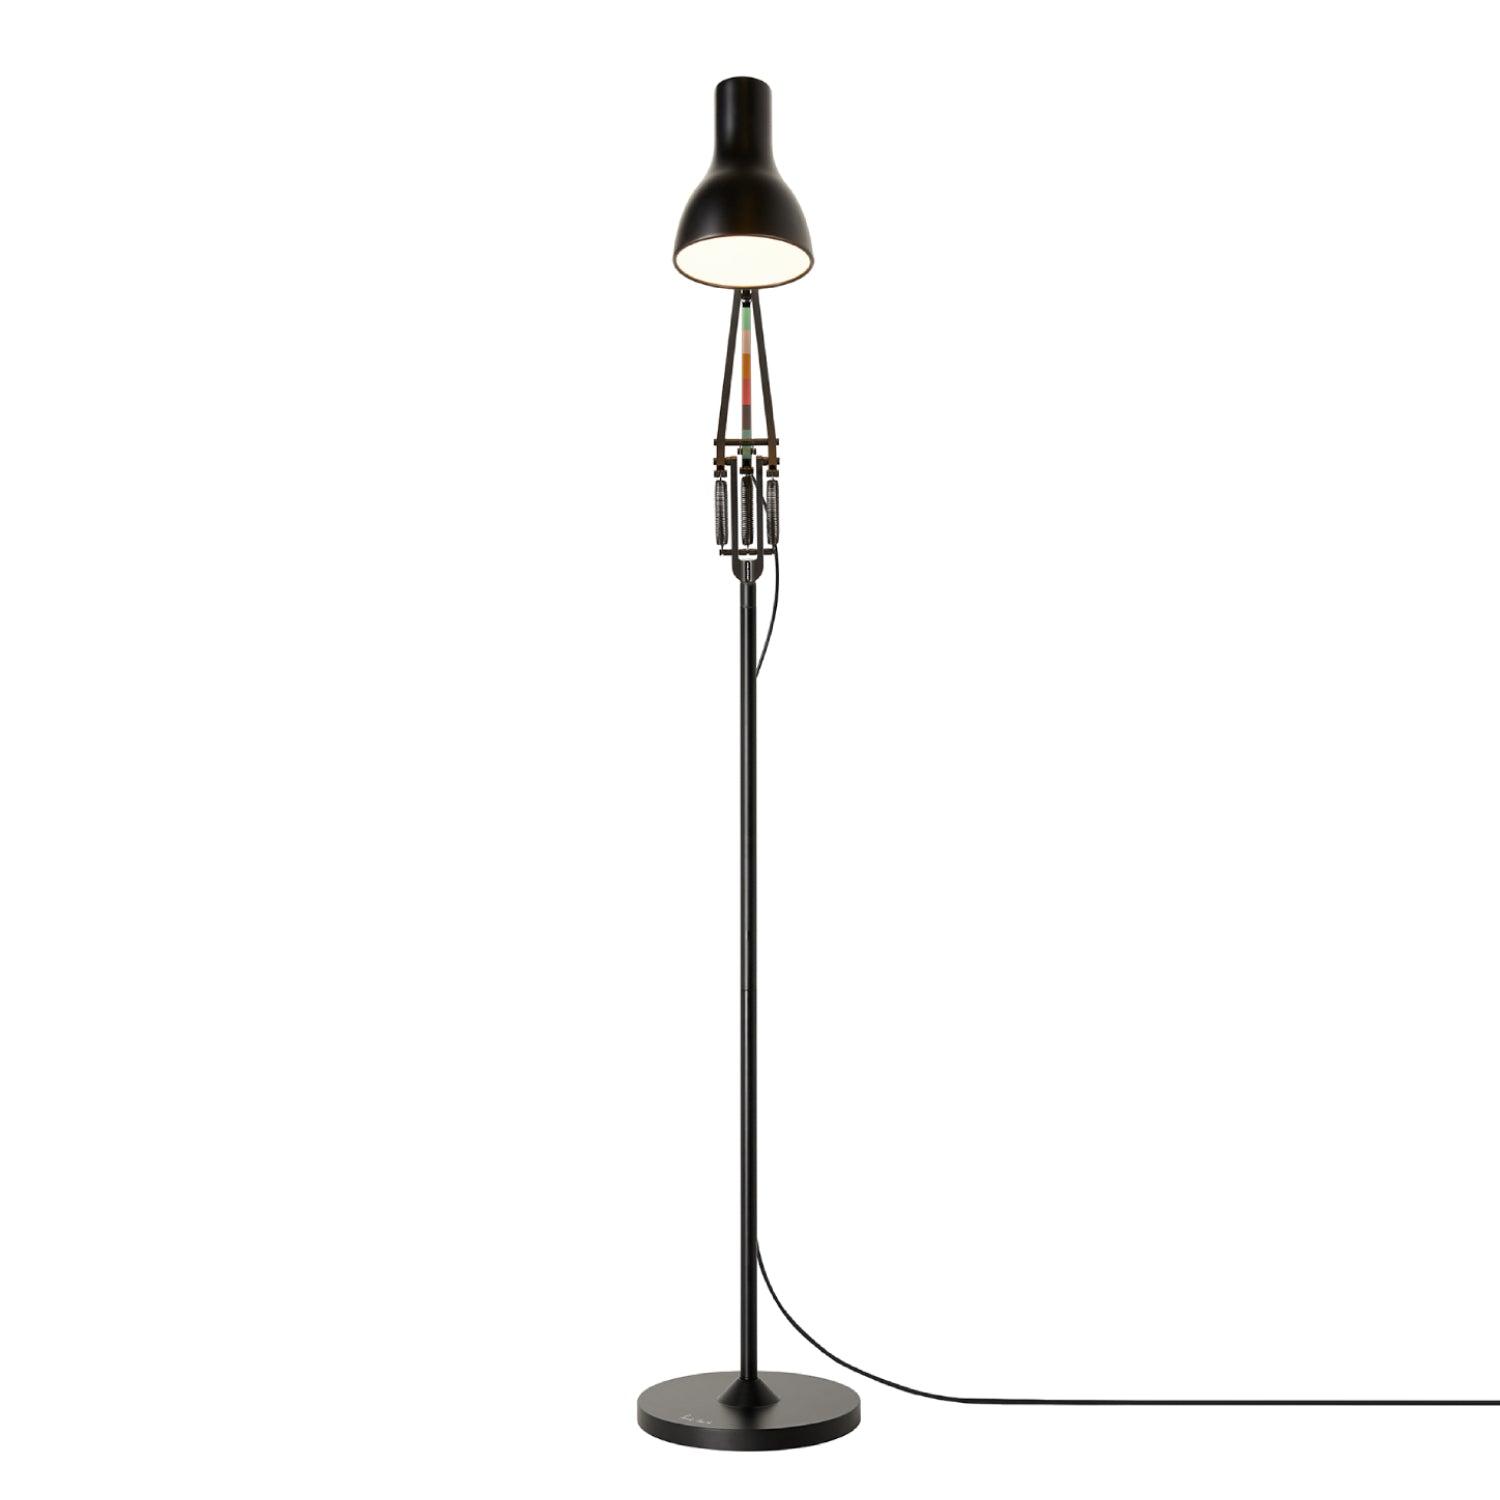 Type 75 Floor Lamp: Paul Smith Edition + Five